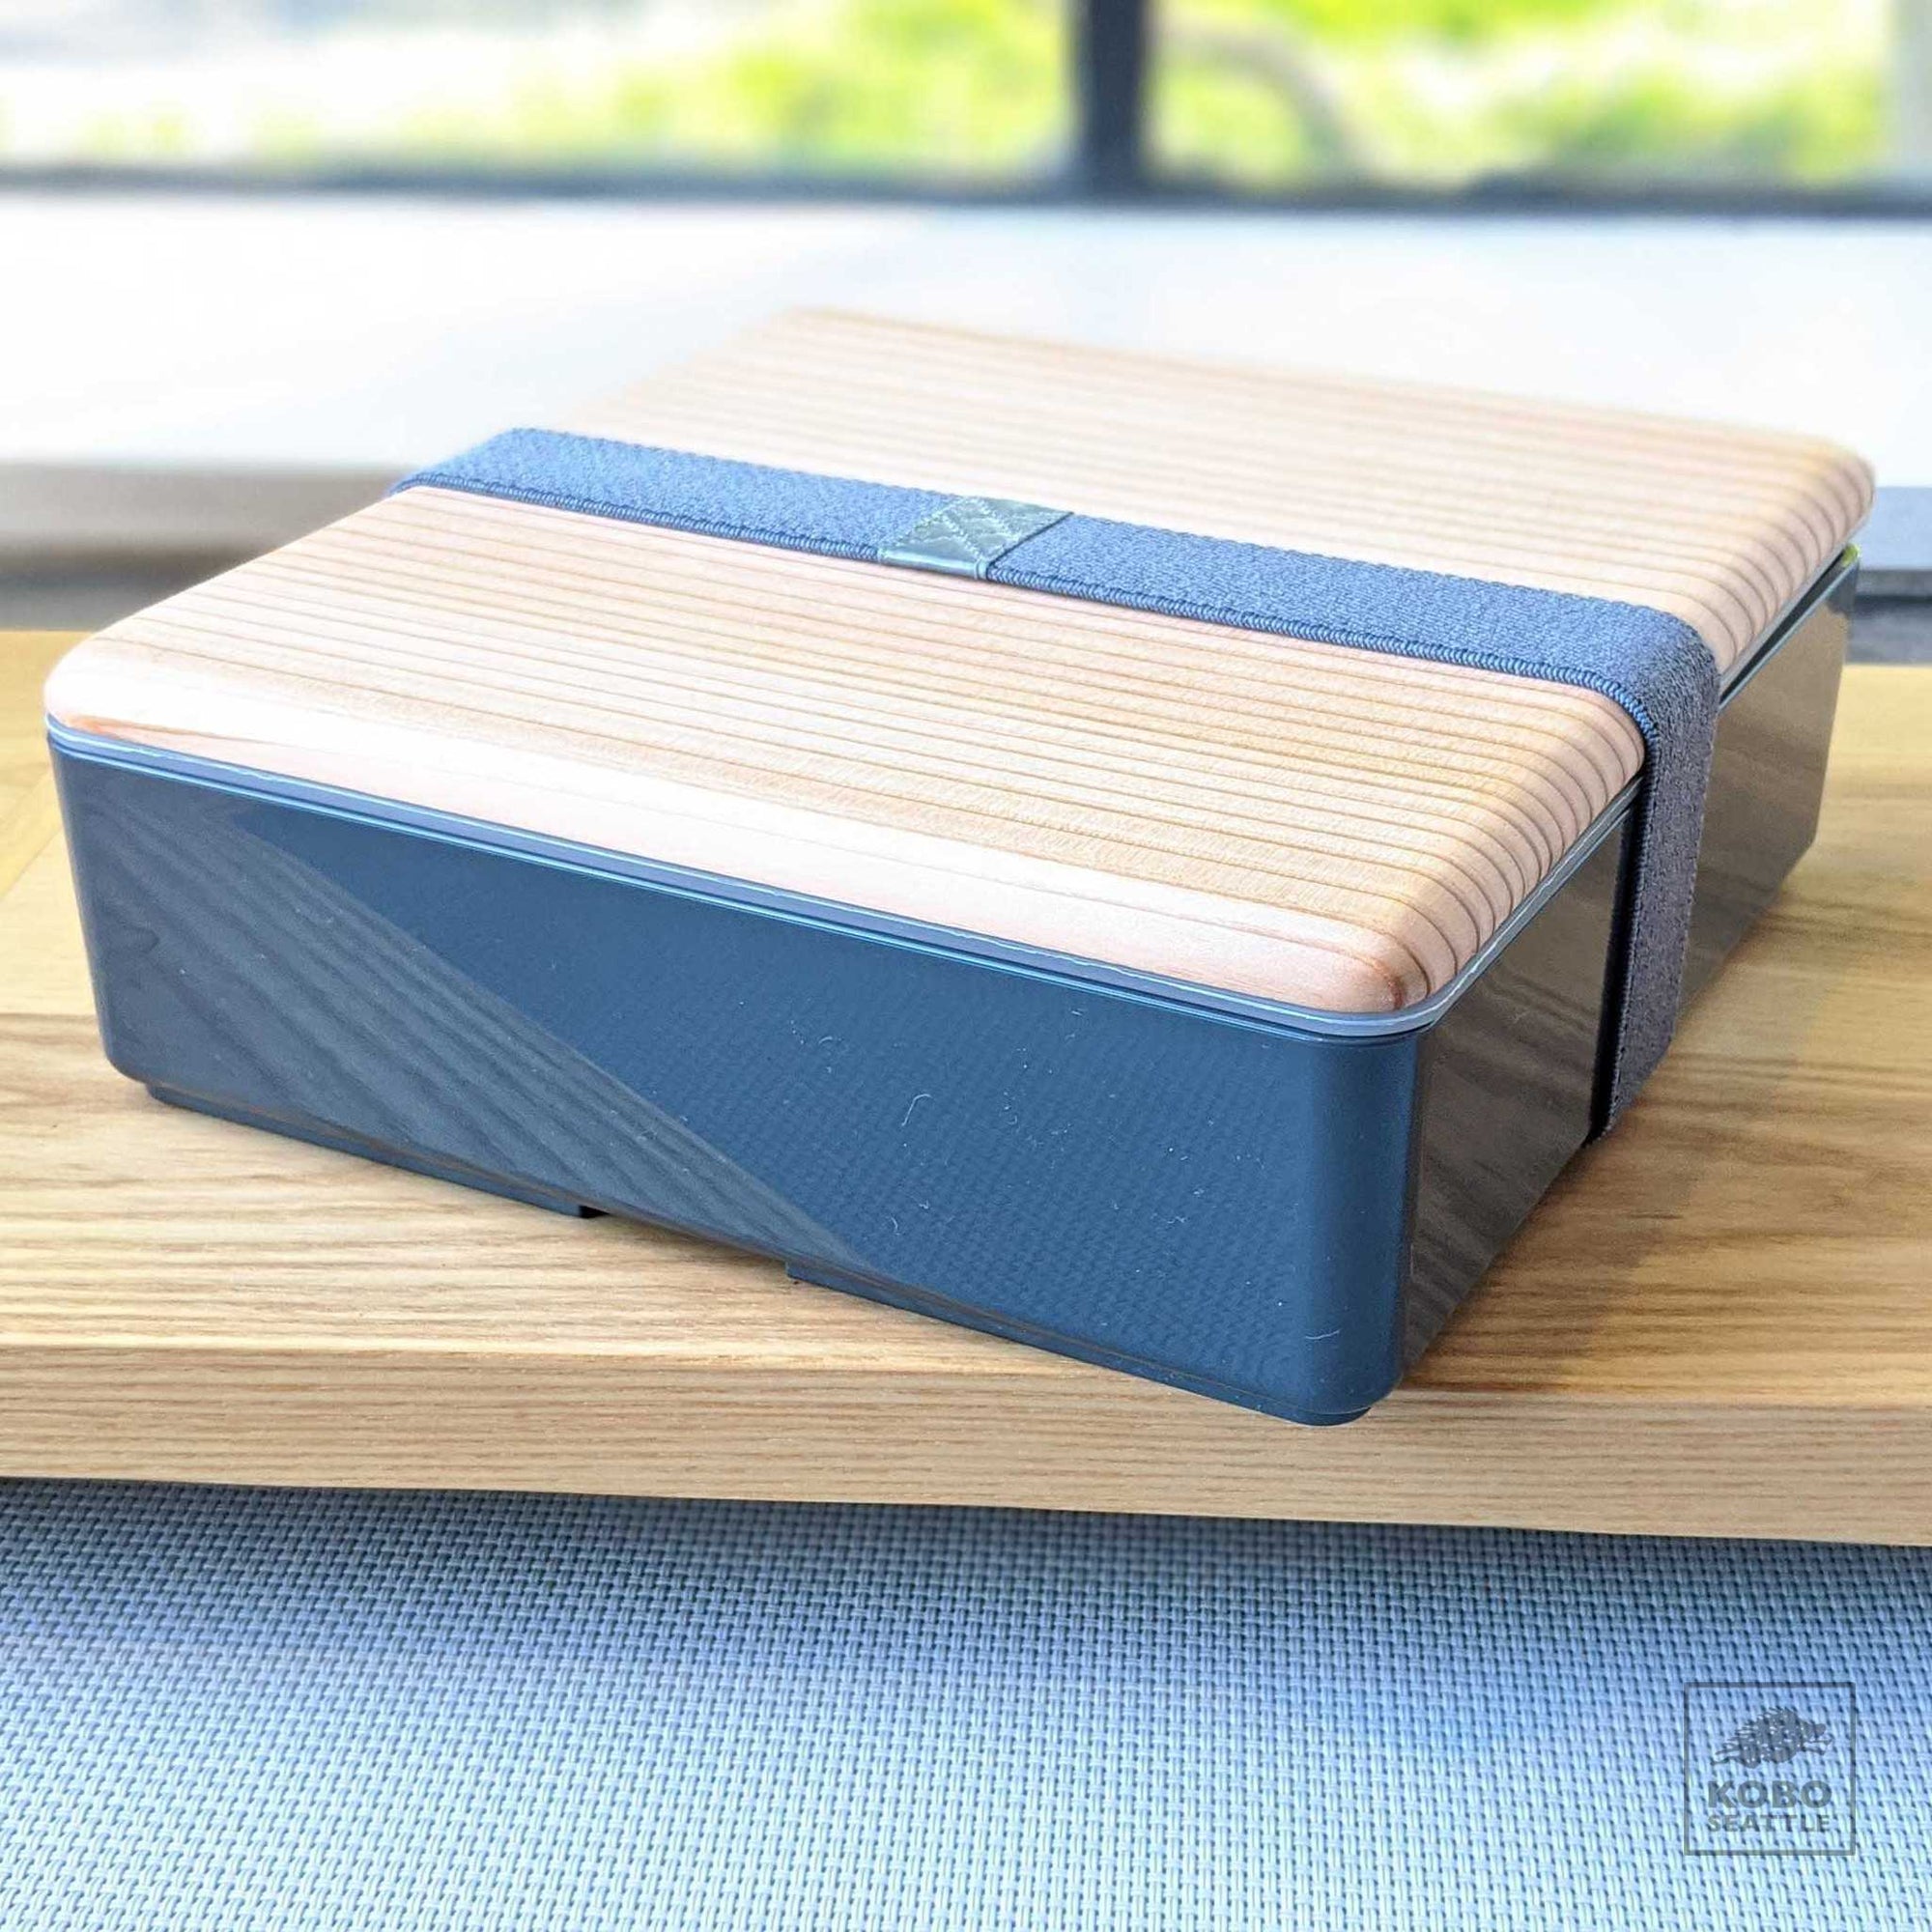 Bento Box - wooden lid